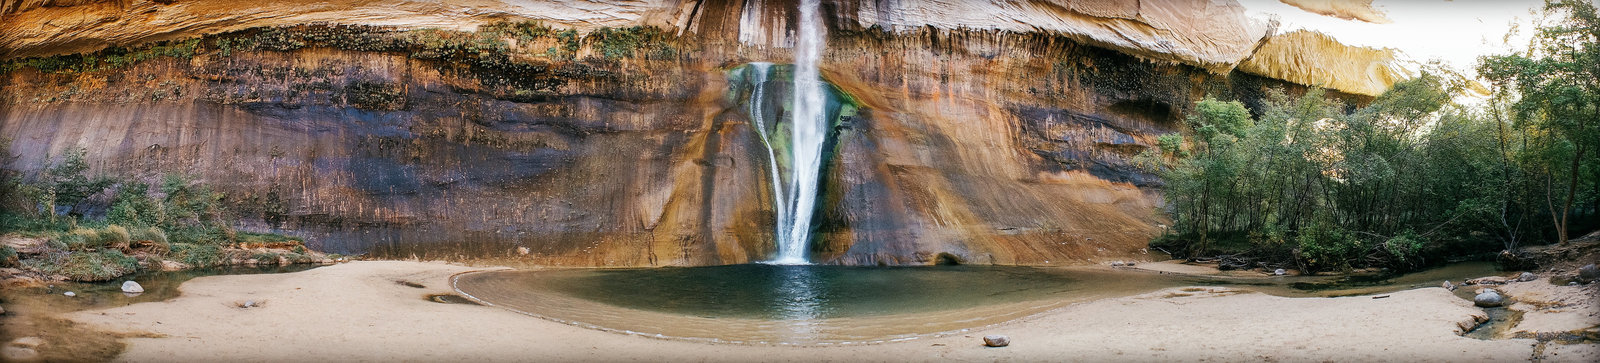 Sasha_Reiko_Photography_Travel_Utah_Arches_Canyon_Lands_Zion_Grand_Canyon-72